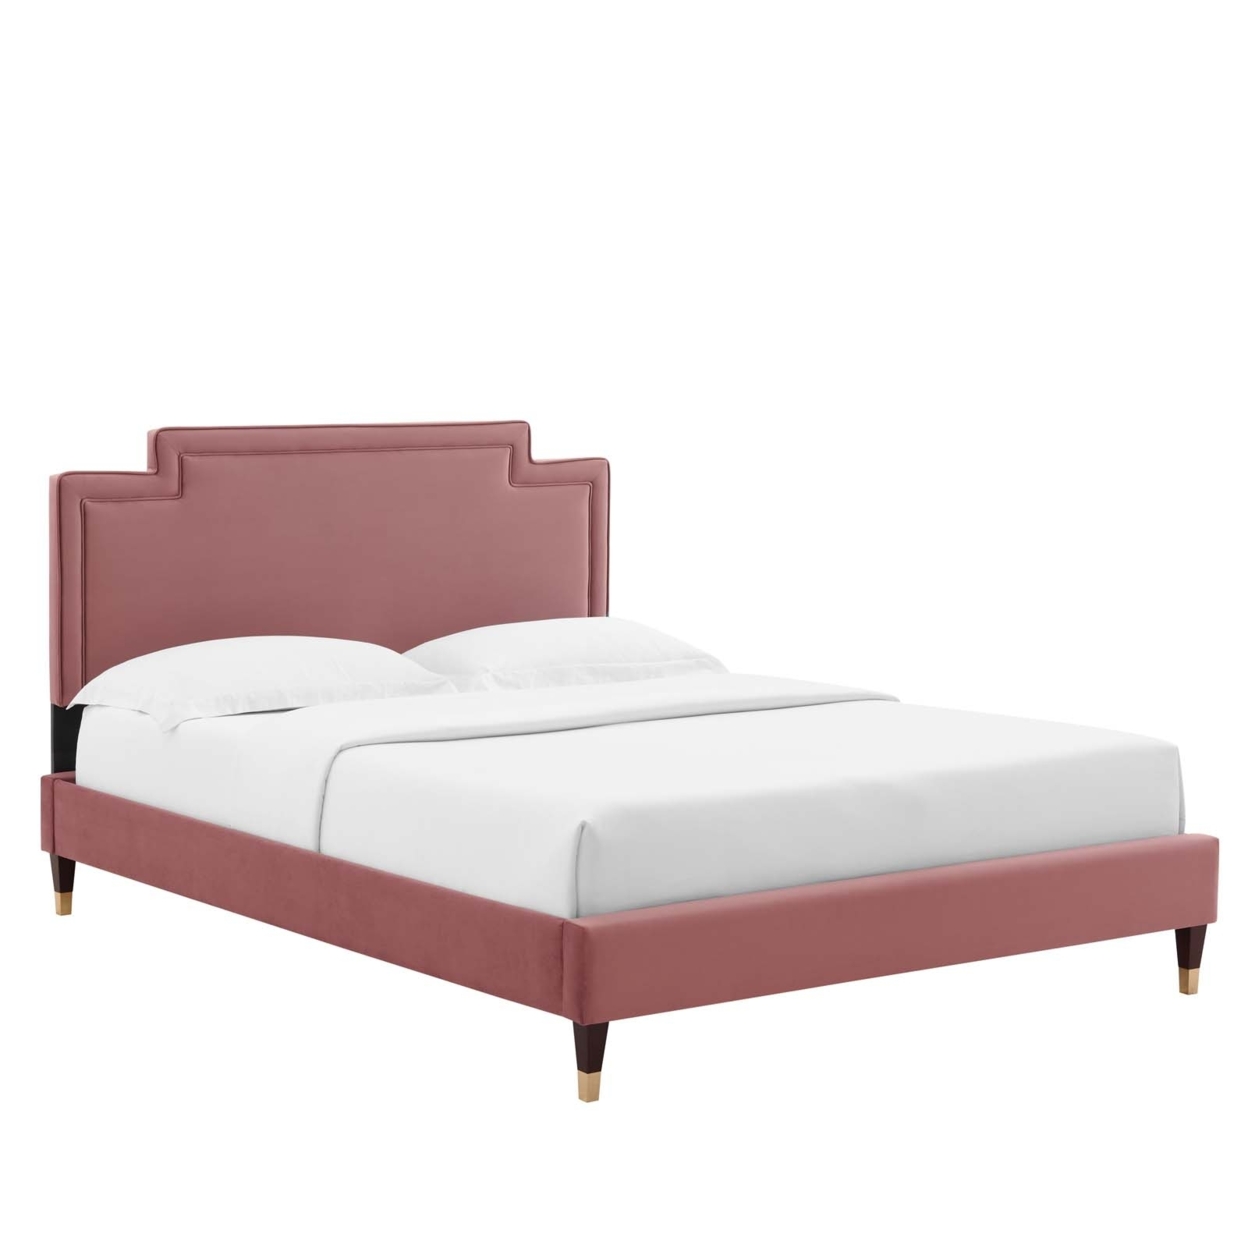 Full Bed, Dusty Pink Velvet, Geometric Headboard, Wood Legs